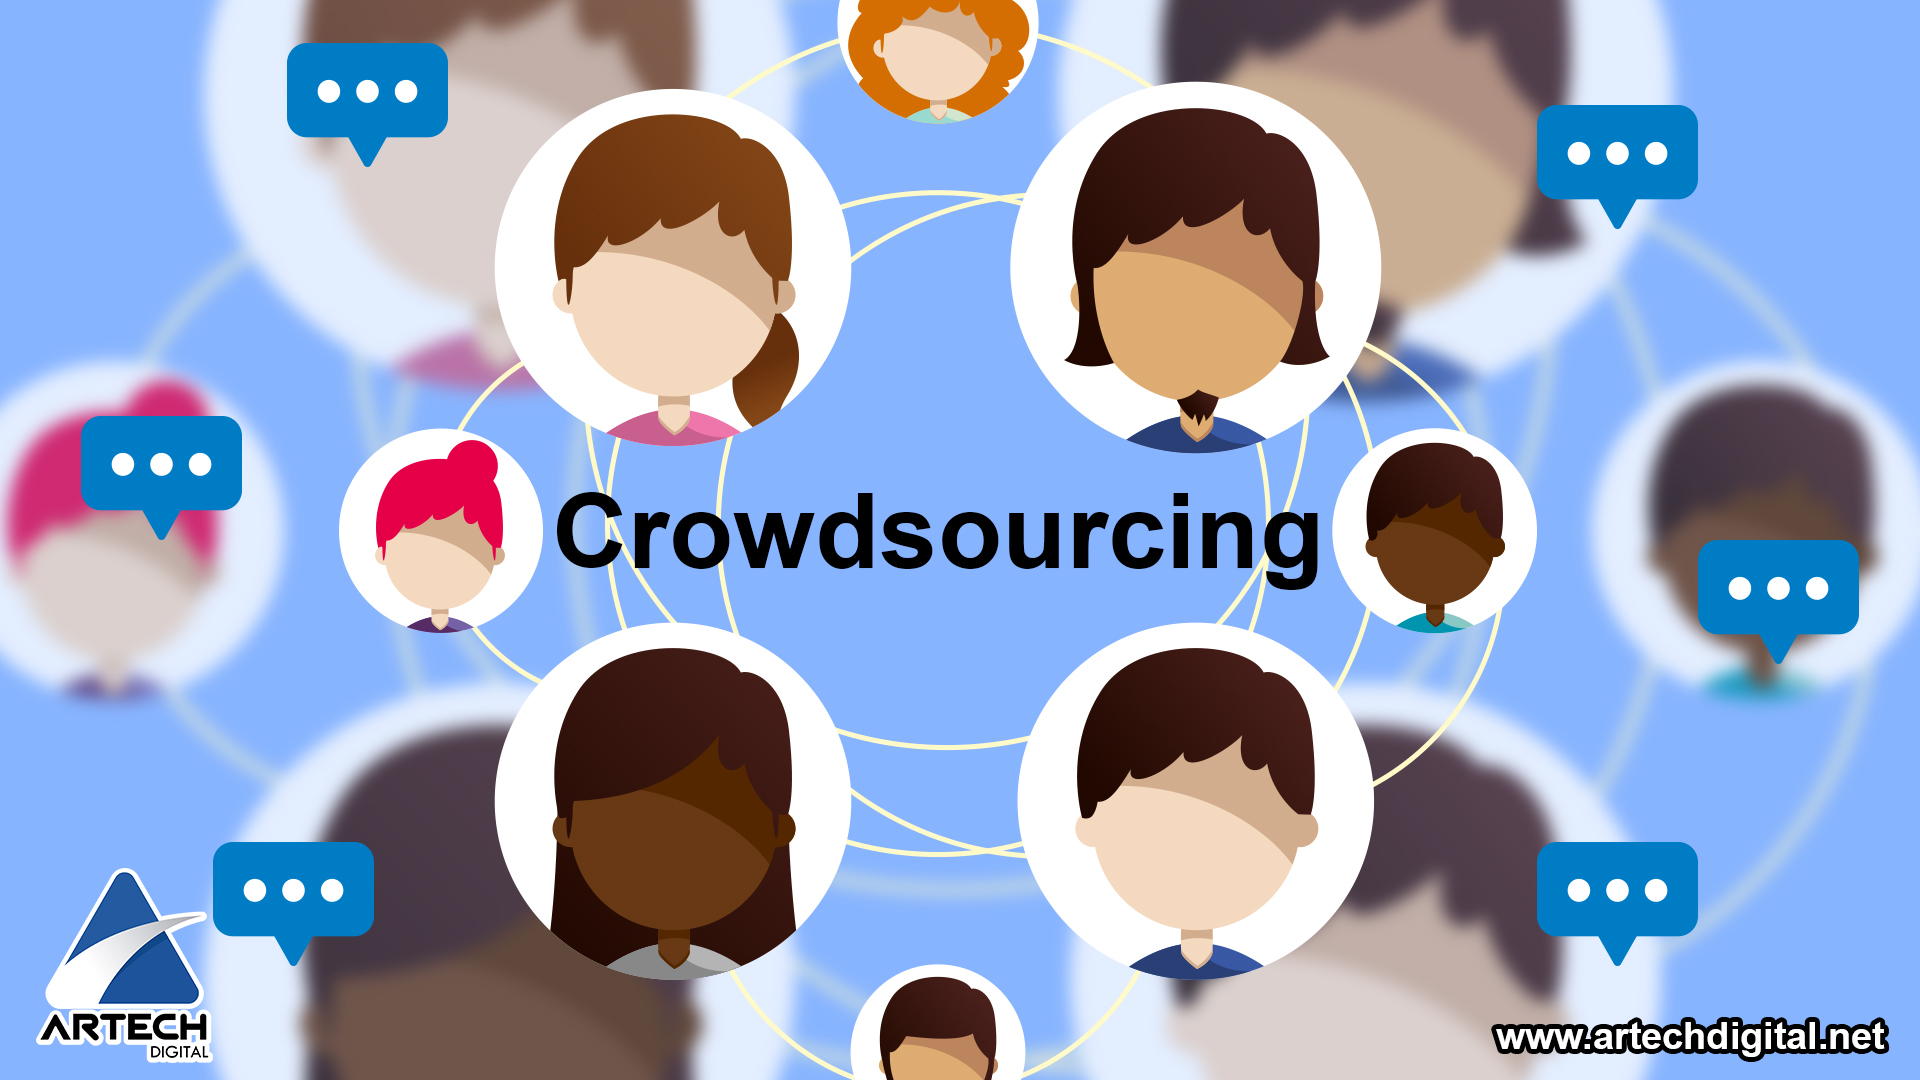 artech digital - crowdsourcing